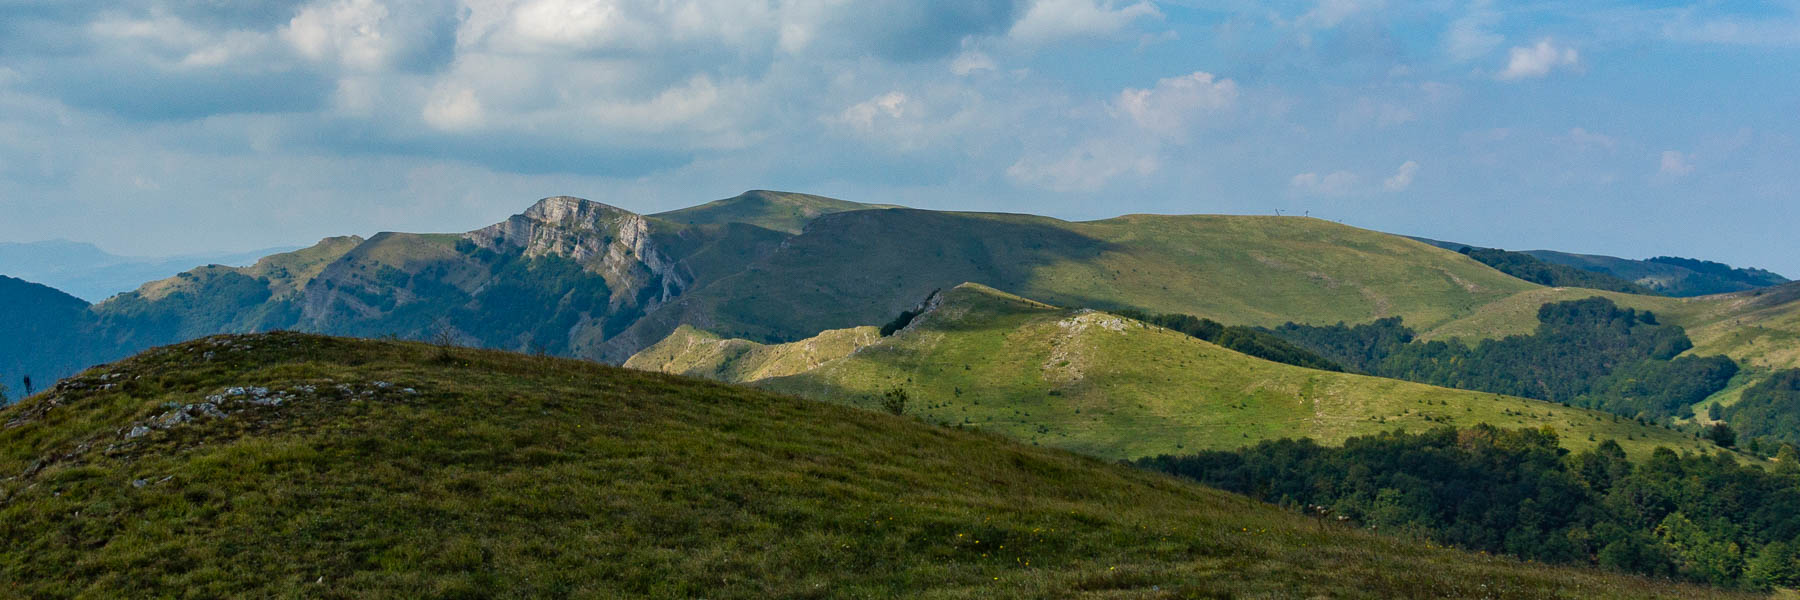 Sommet du massif de Vratsa : Beglichka Mogila, 1481 m